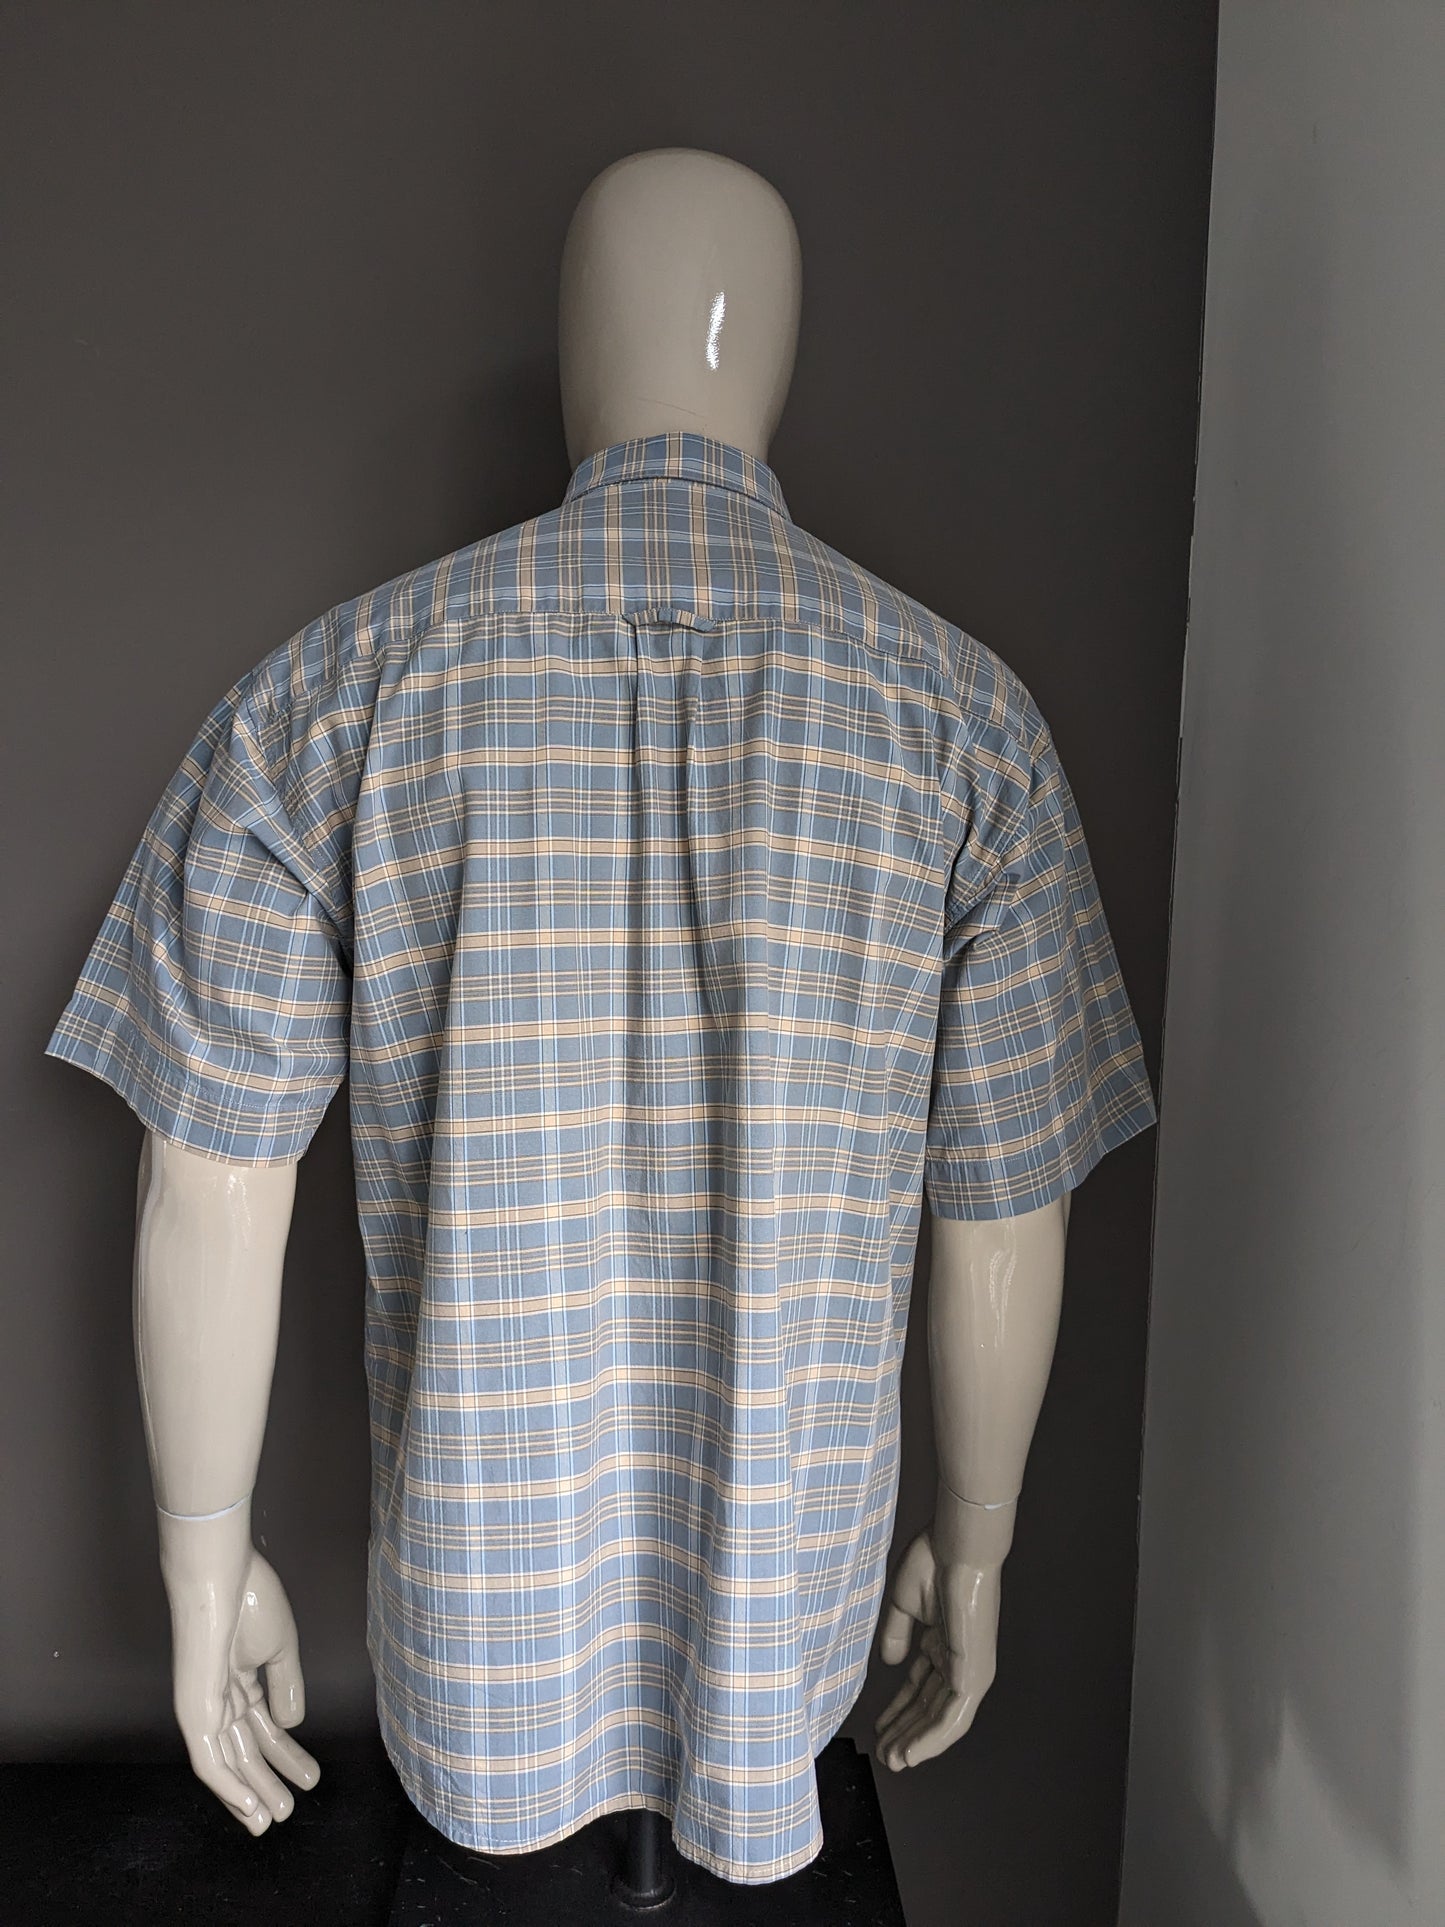 Camisa deportiva de cultura vintage manga corta. Verificador de color beige azul. Tamaño L / XL.